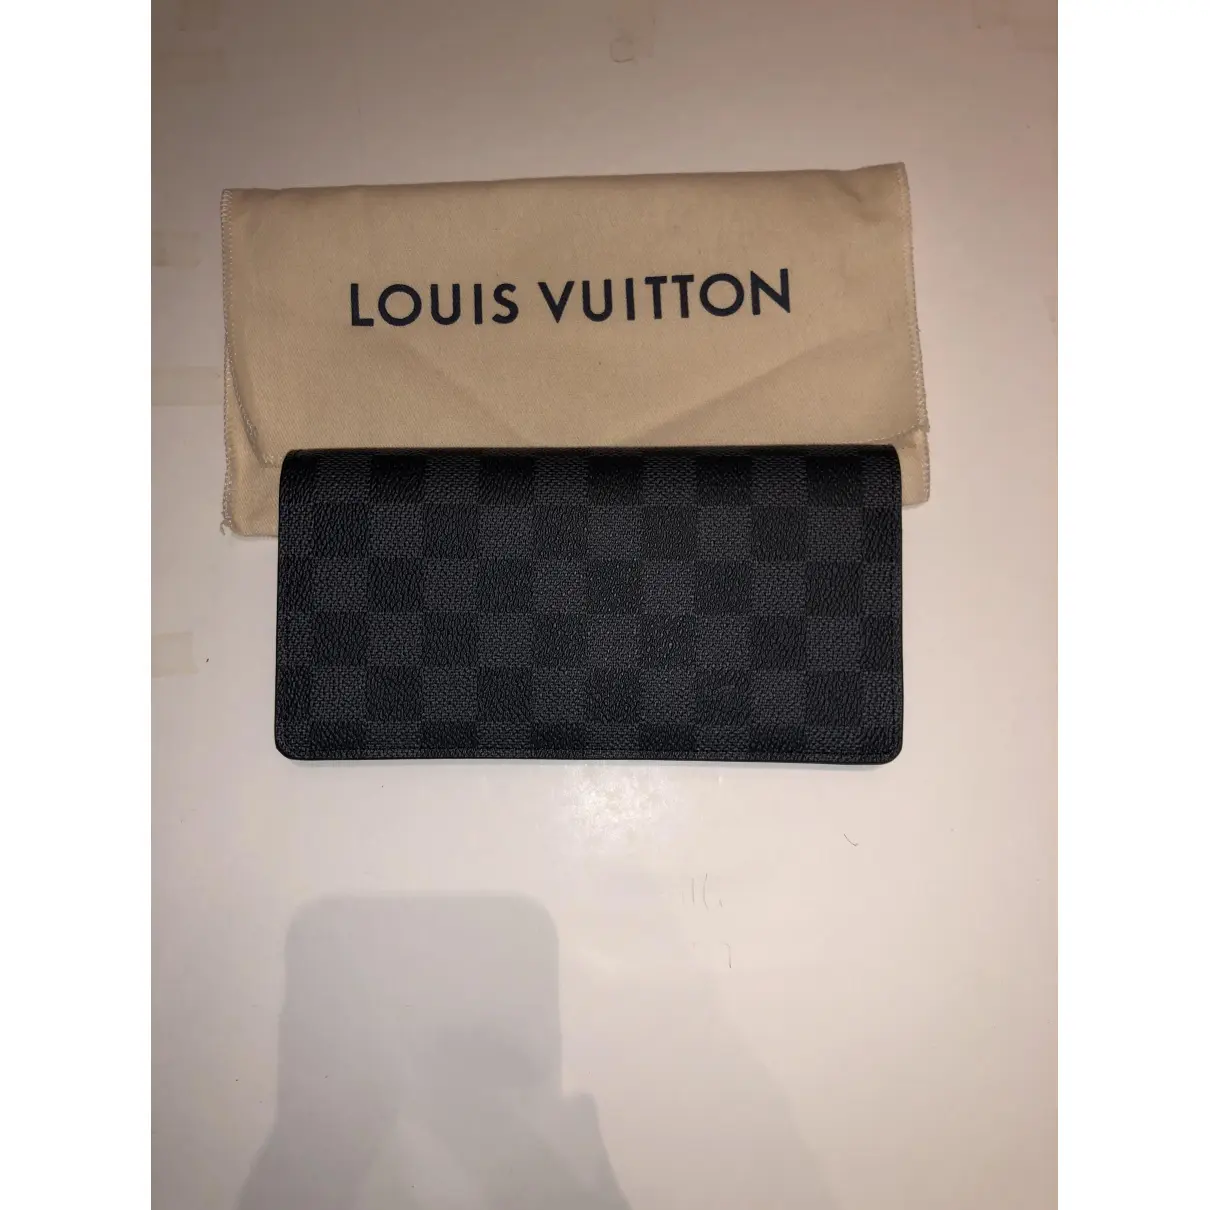 Buy Louis Vuitton Brazza cloth small bag online